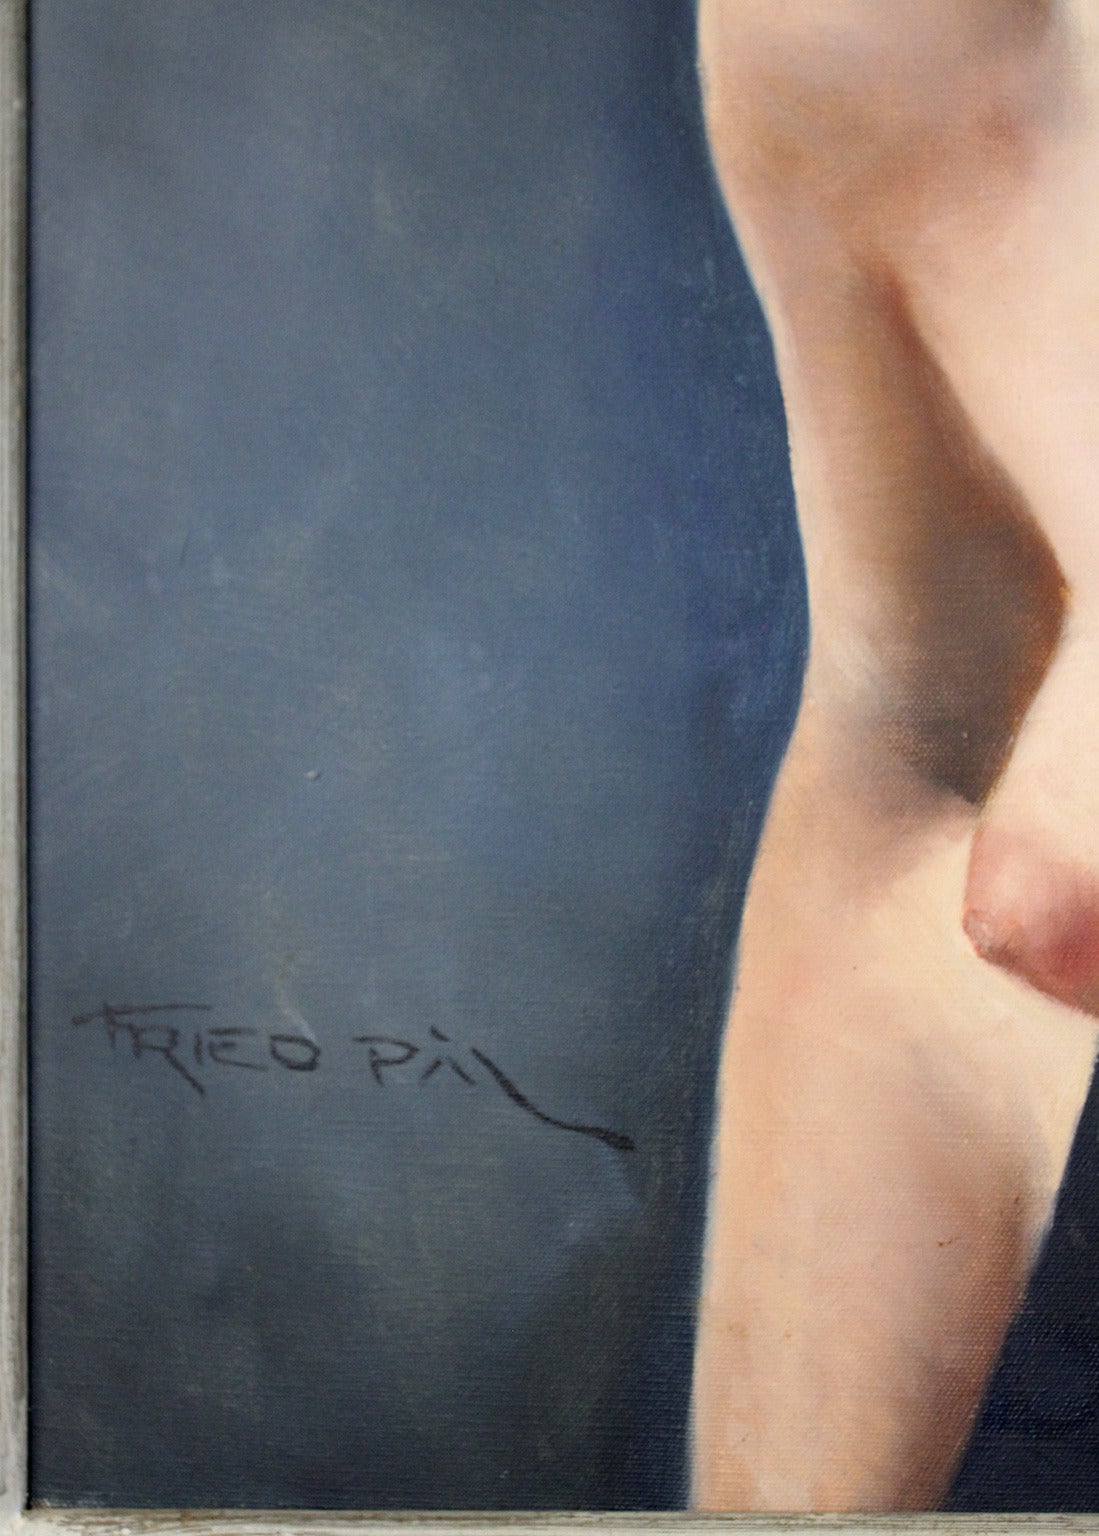 Pal Fried Nude Portrait Oil on Canvas For Sale 3